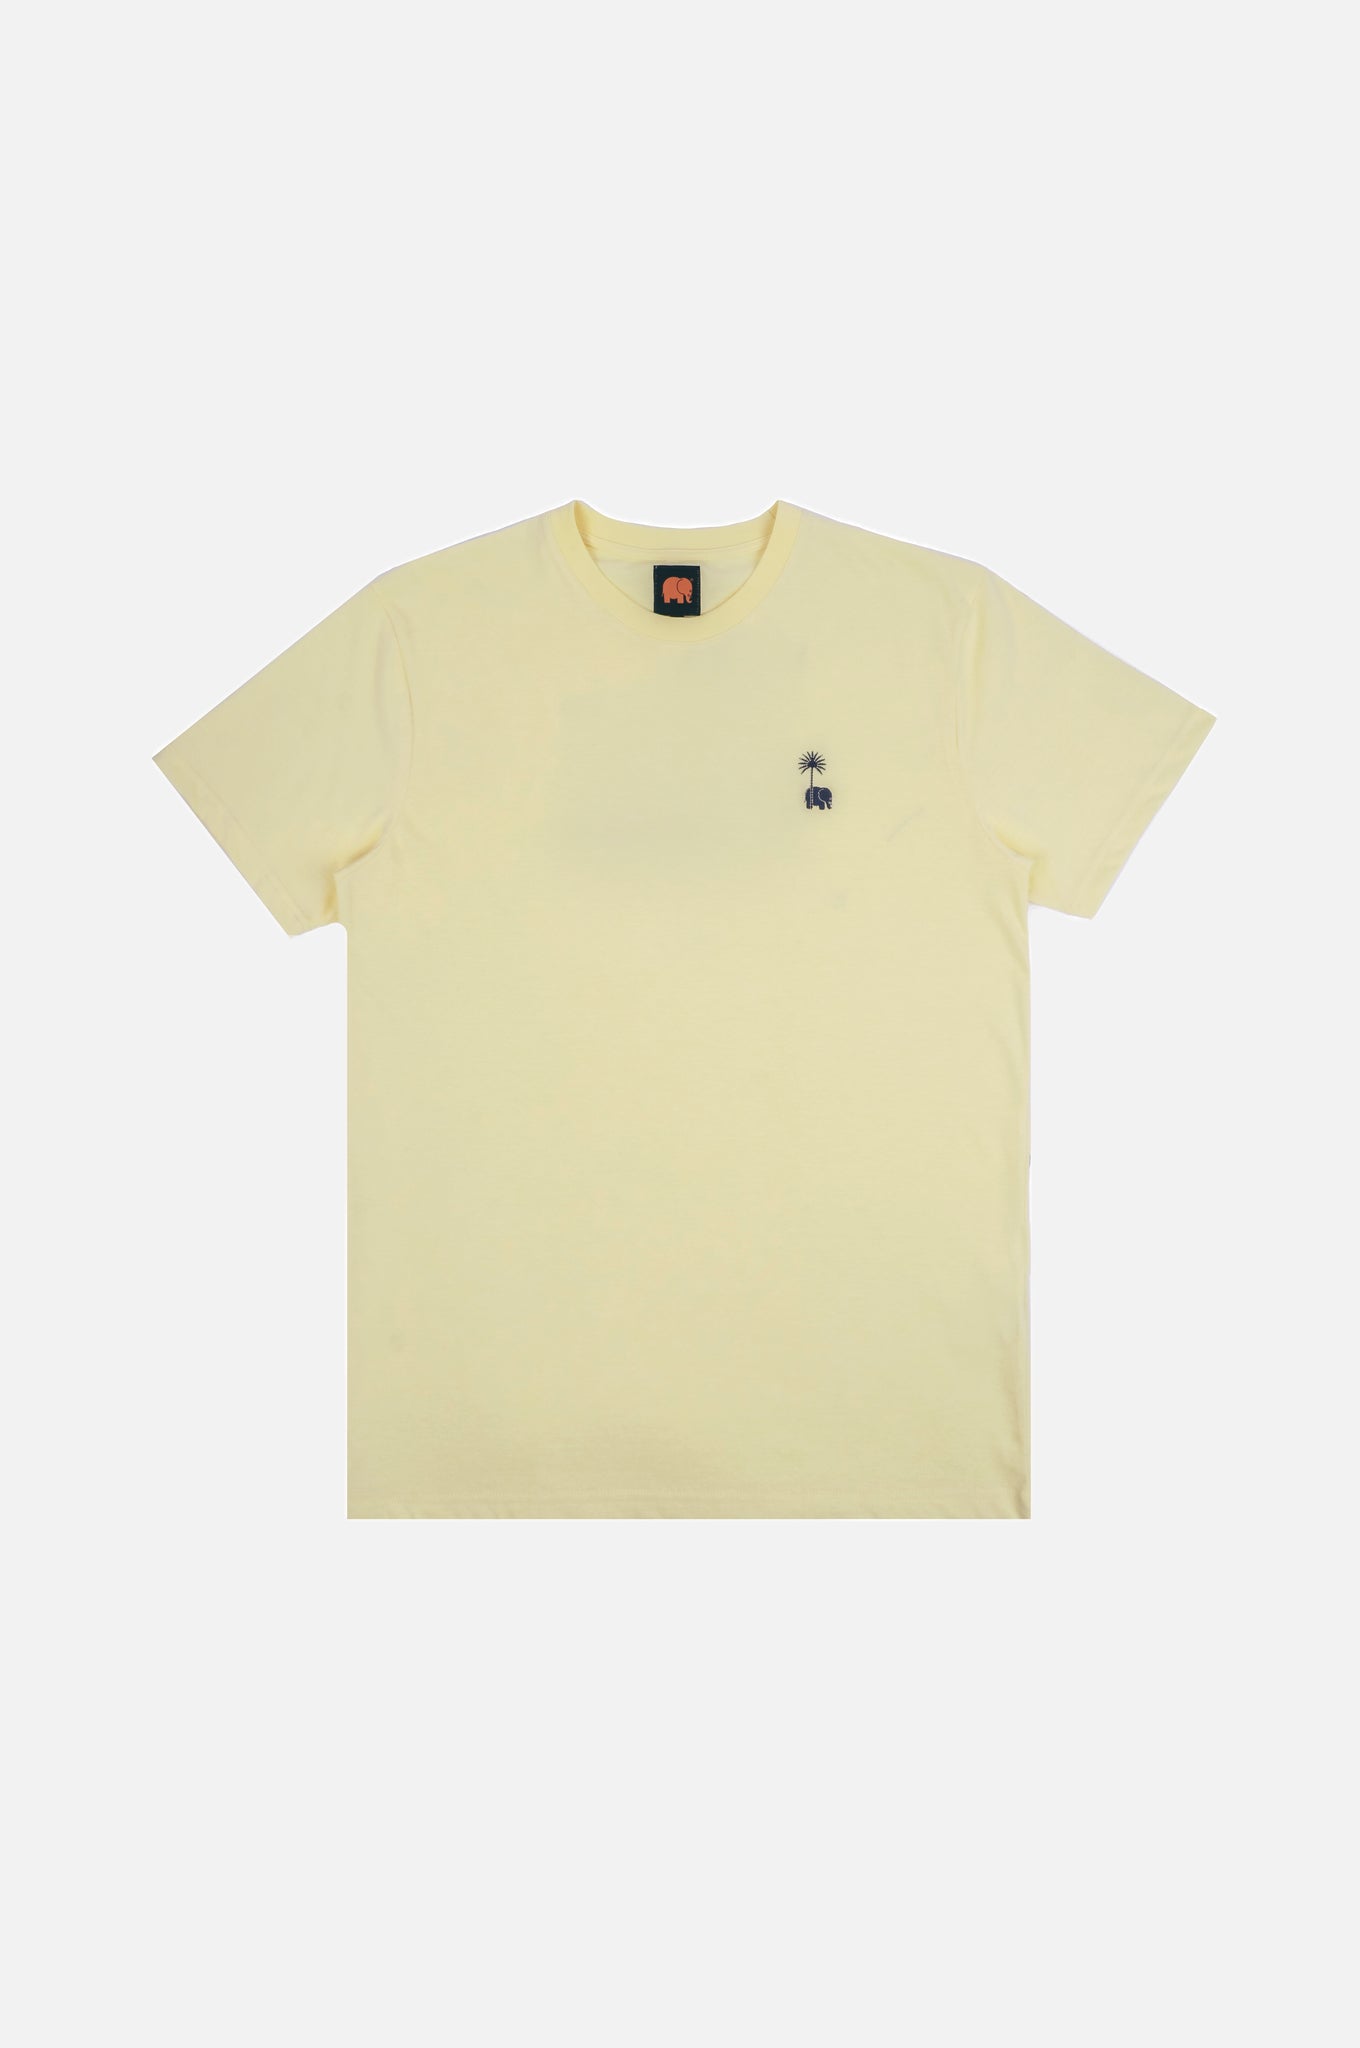 Antonyo Marest x Trendsplant Sketch Camiseta Pastel Yellow